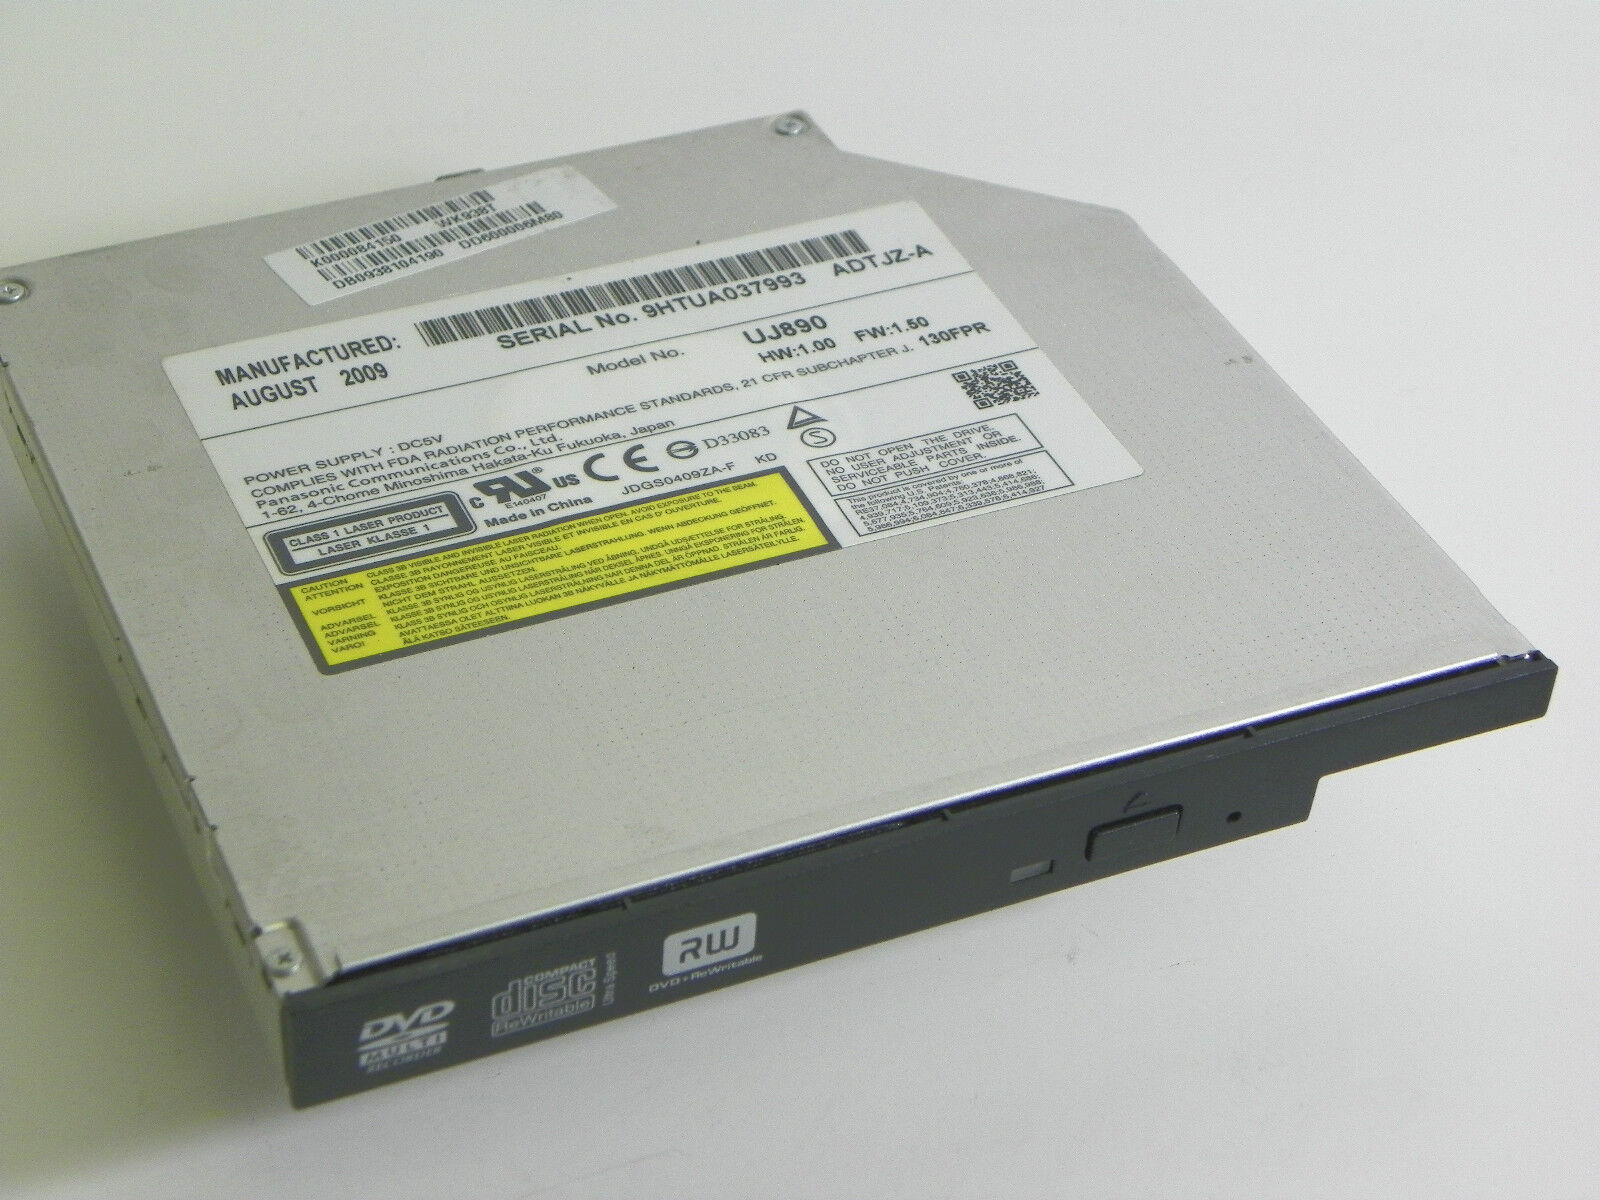 Panasonic UJ890 DVD±RW SATA Drive - Serial ATA K000084150